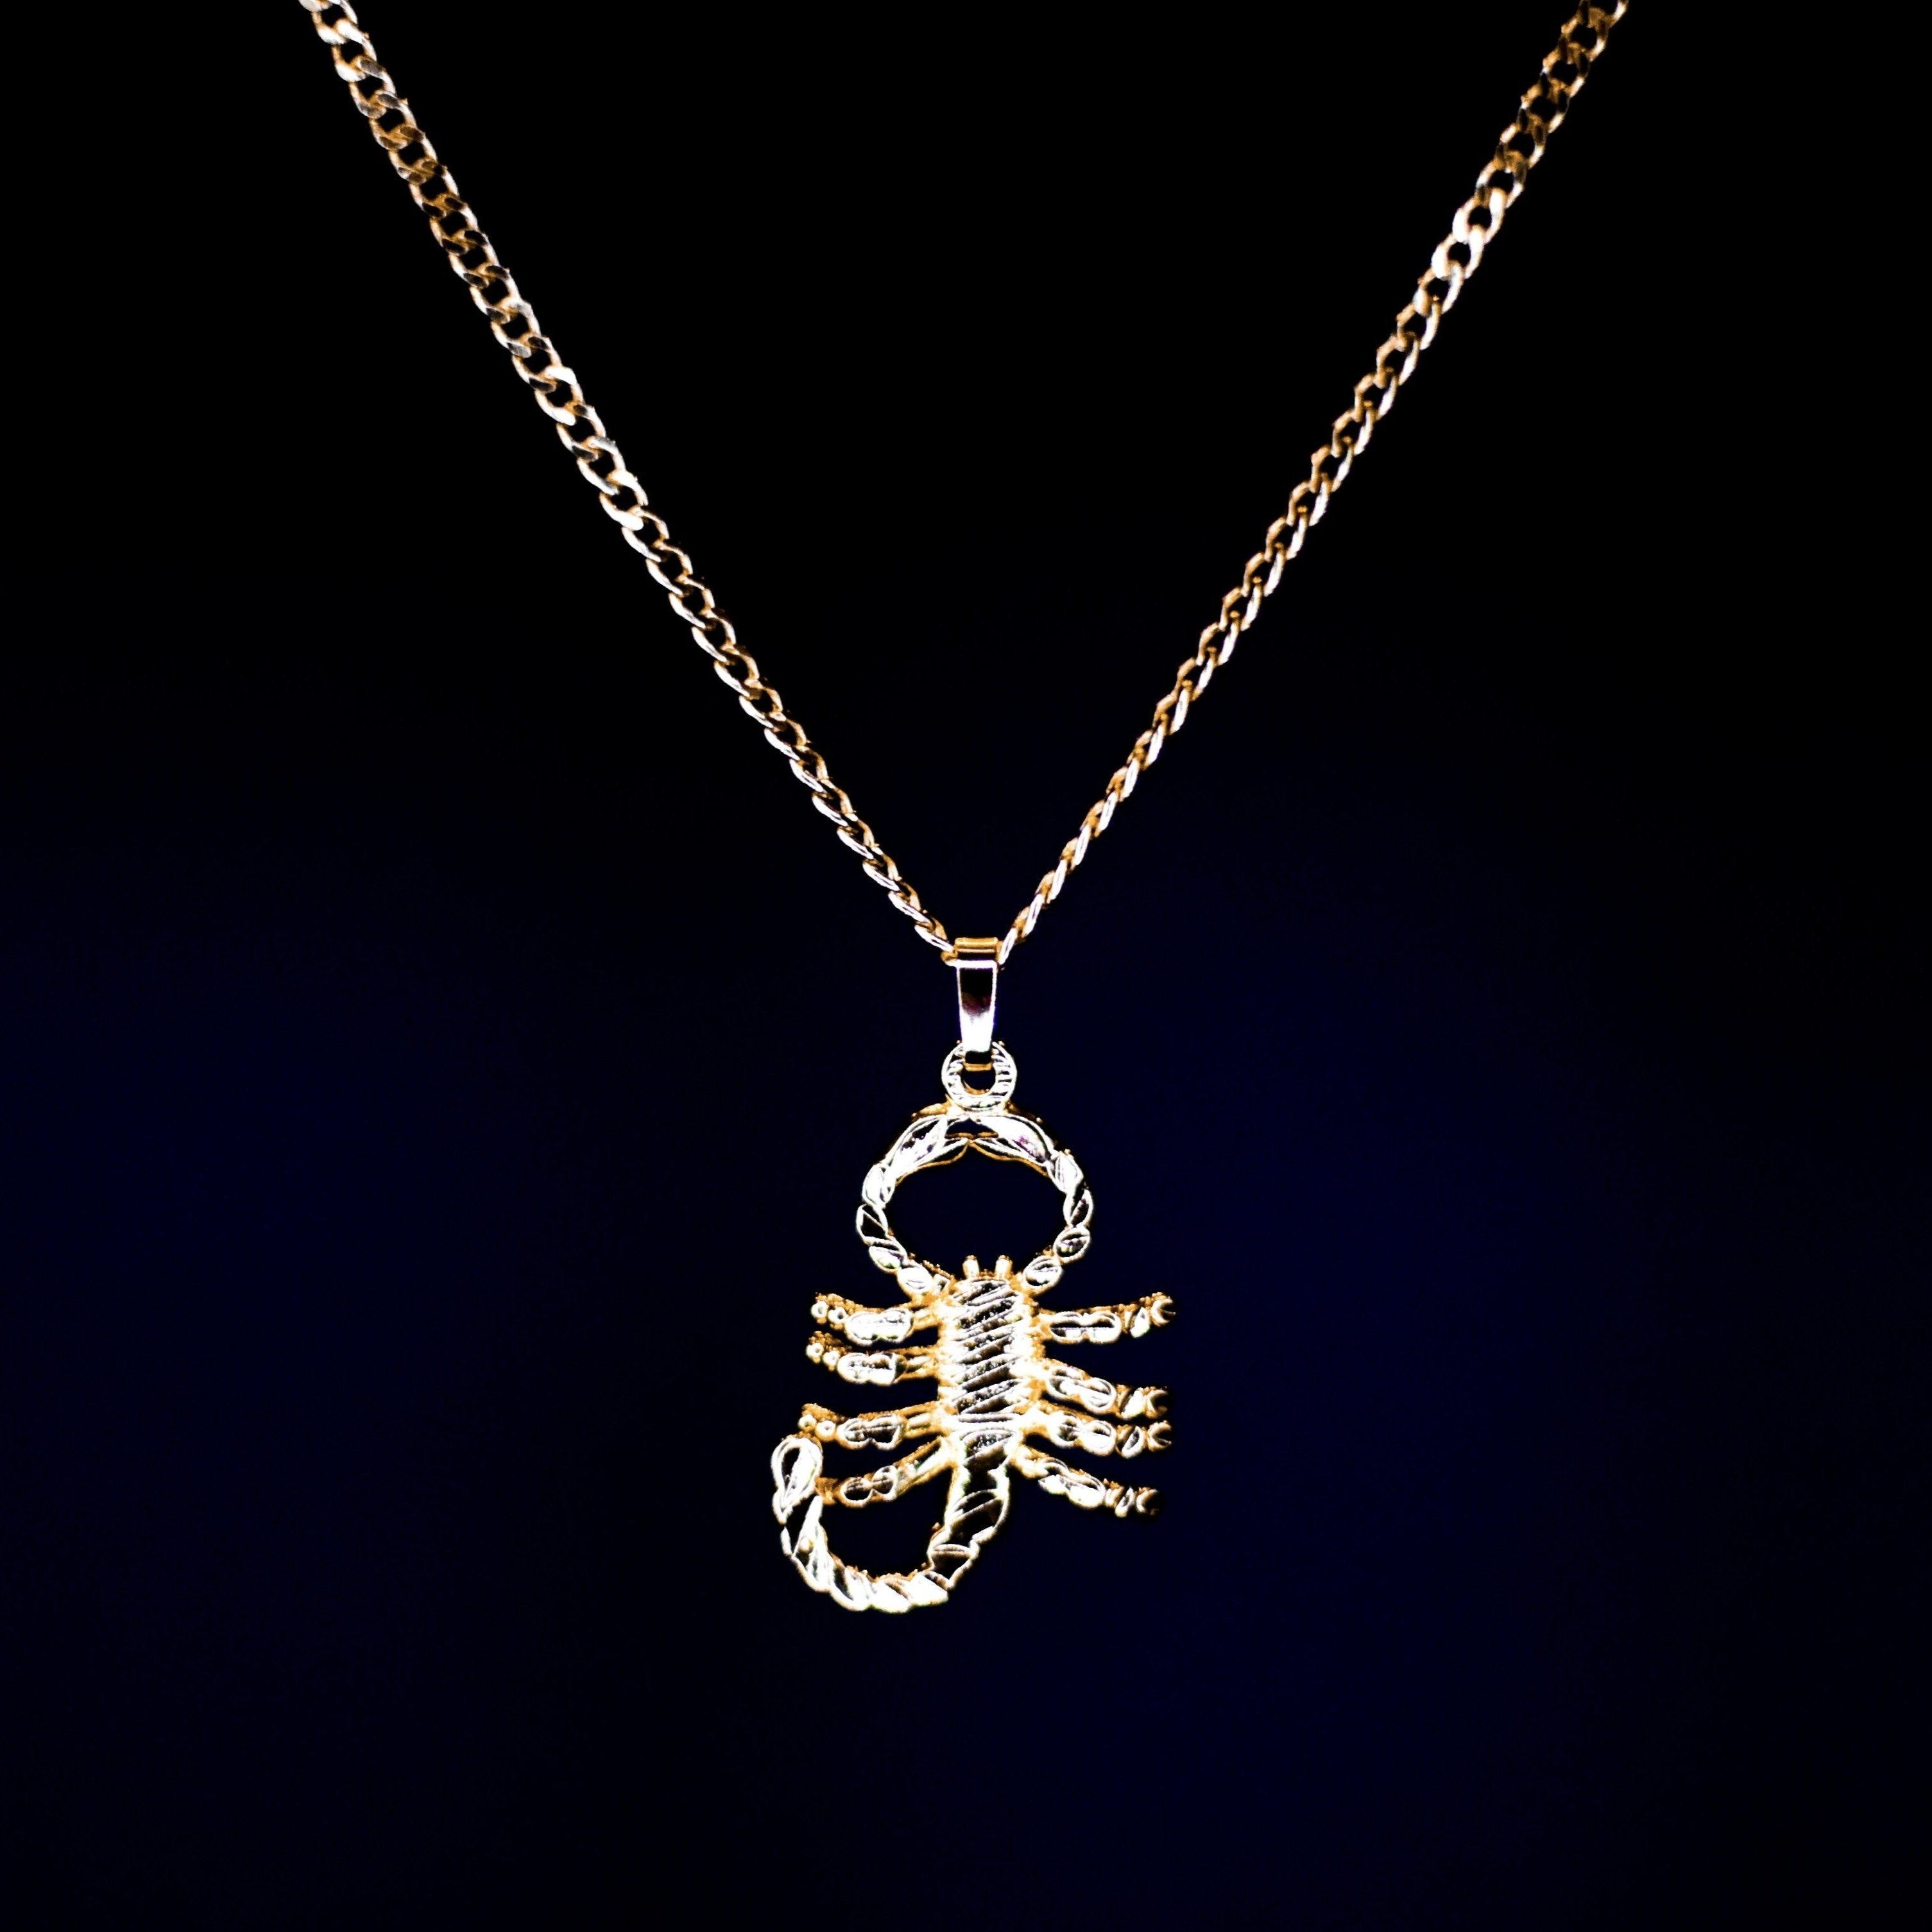 Retro Blvd Scorpion Edition – Necklace Limited